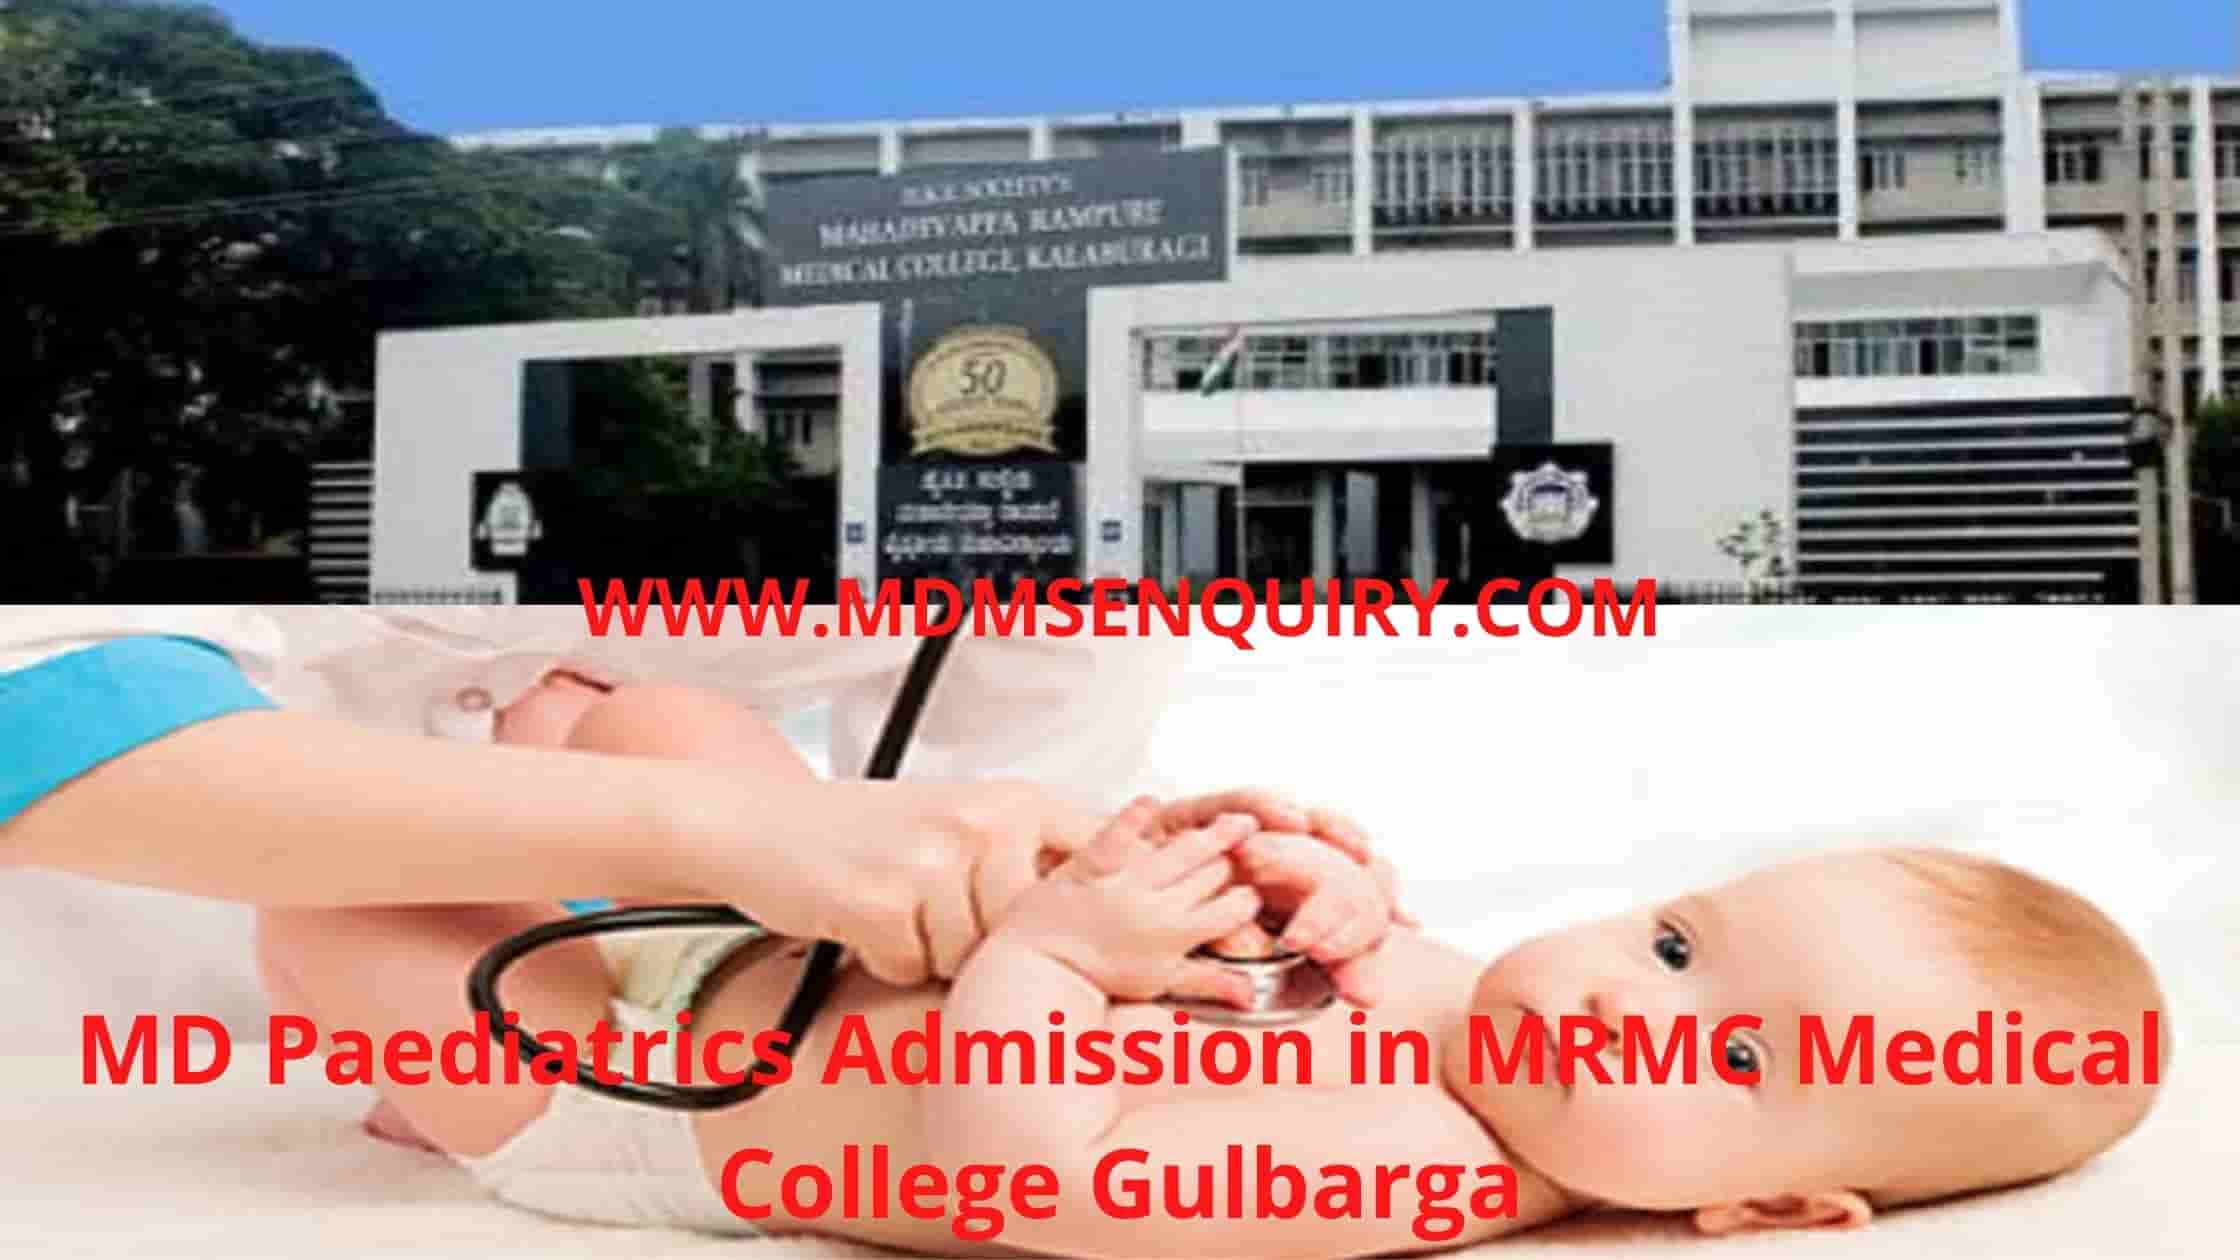 MD Paediatrics Admission in MRMC Medical College Gulbarga